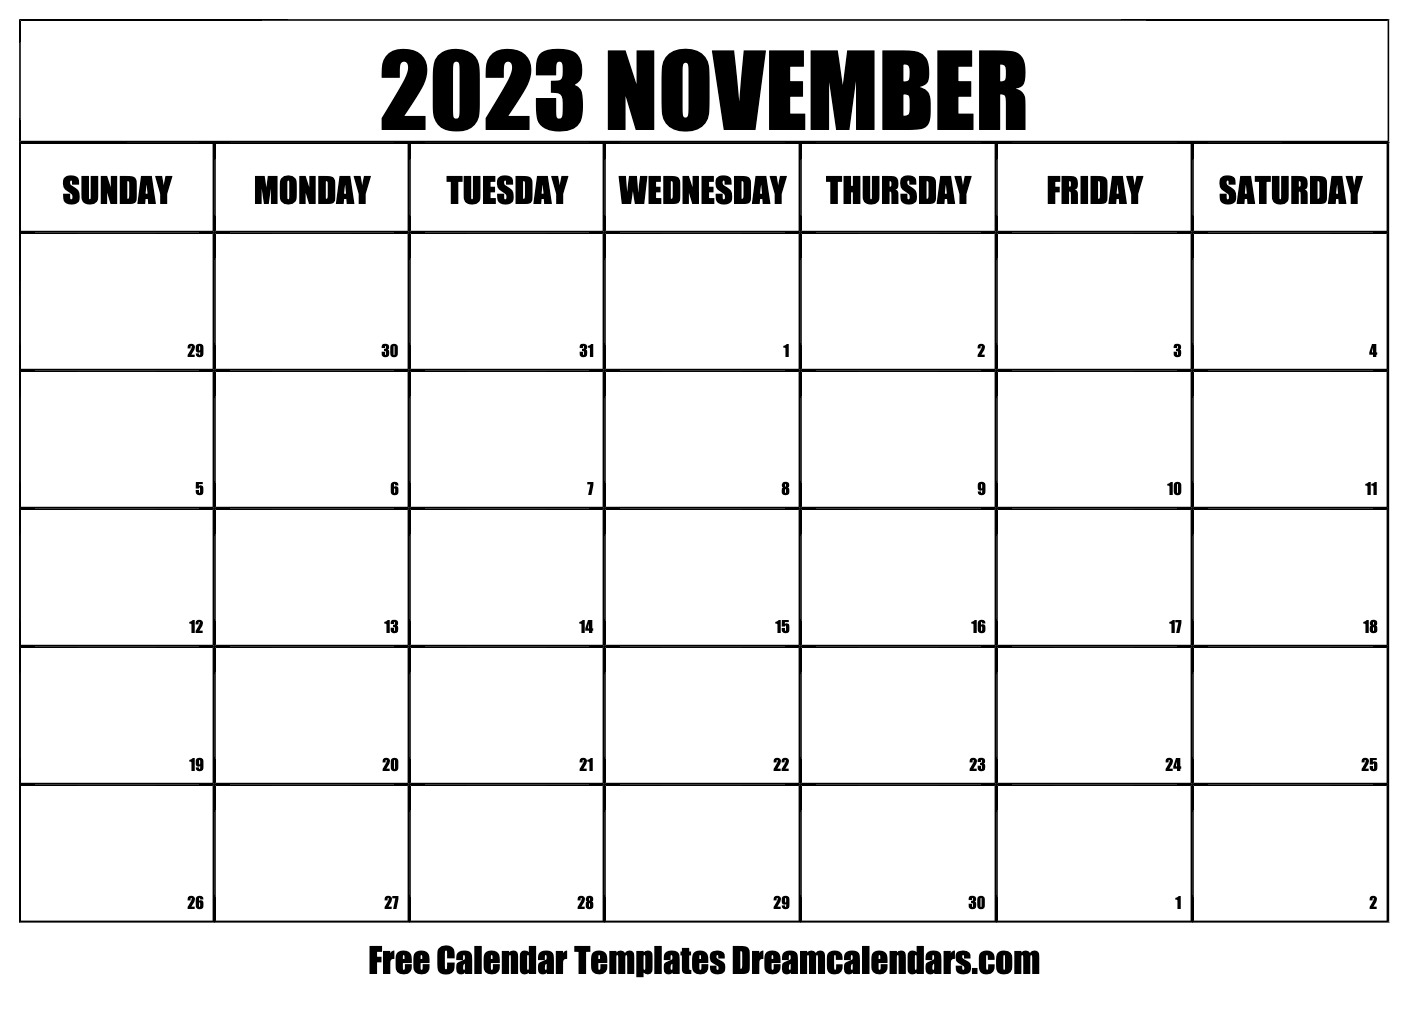 November 2023 Free Calendar Printable November 2023 Calendar Free 